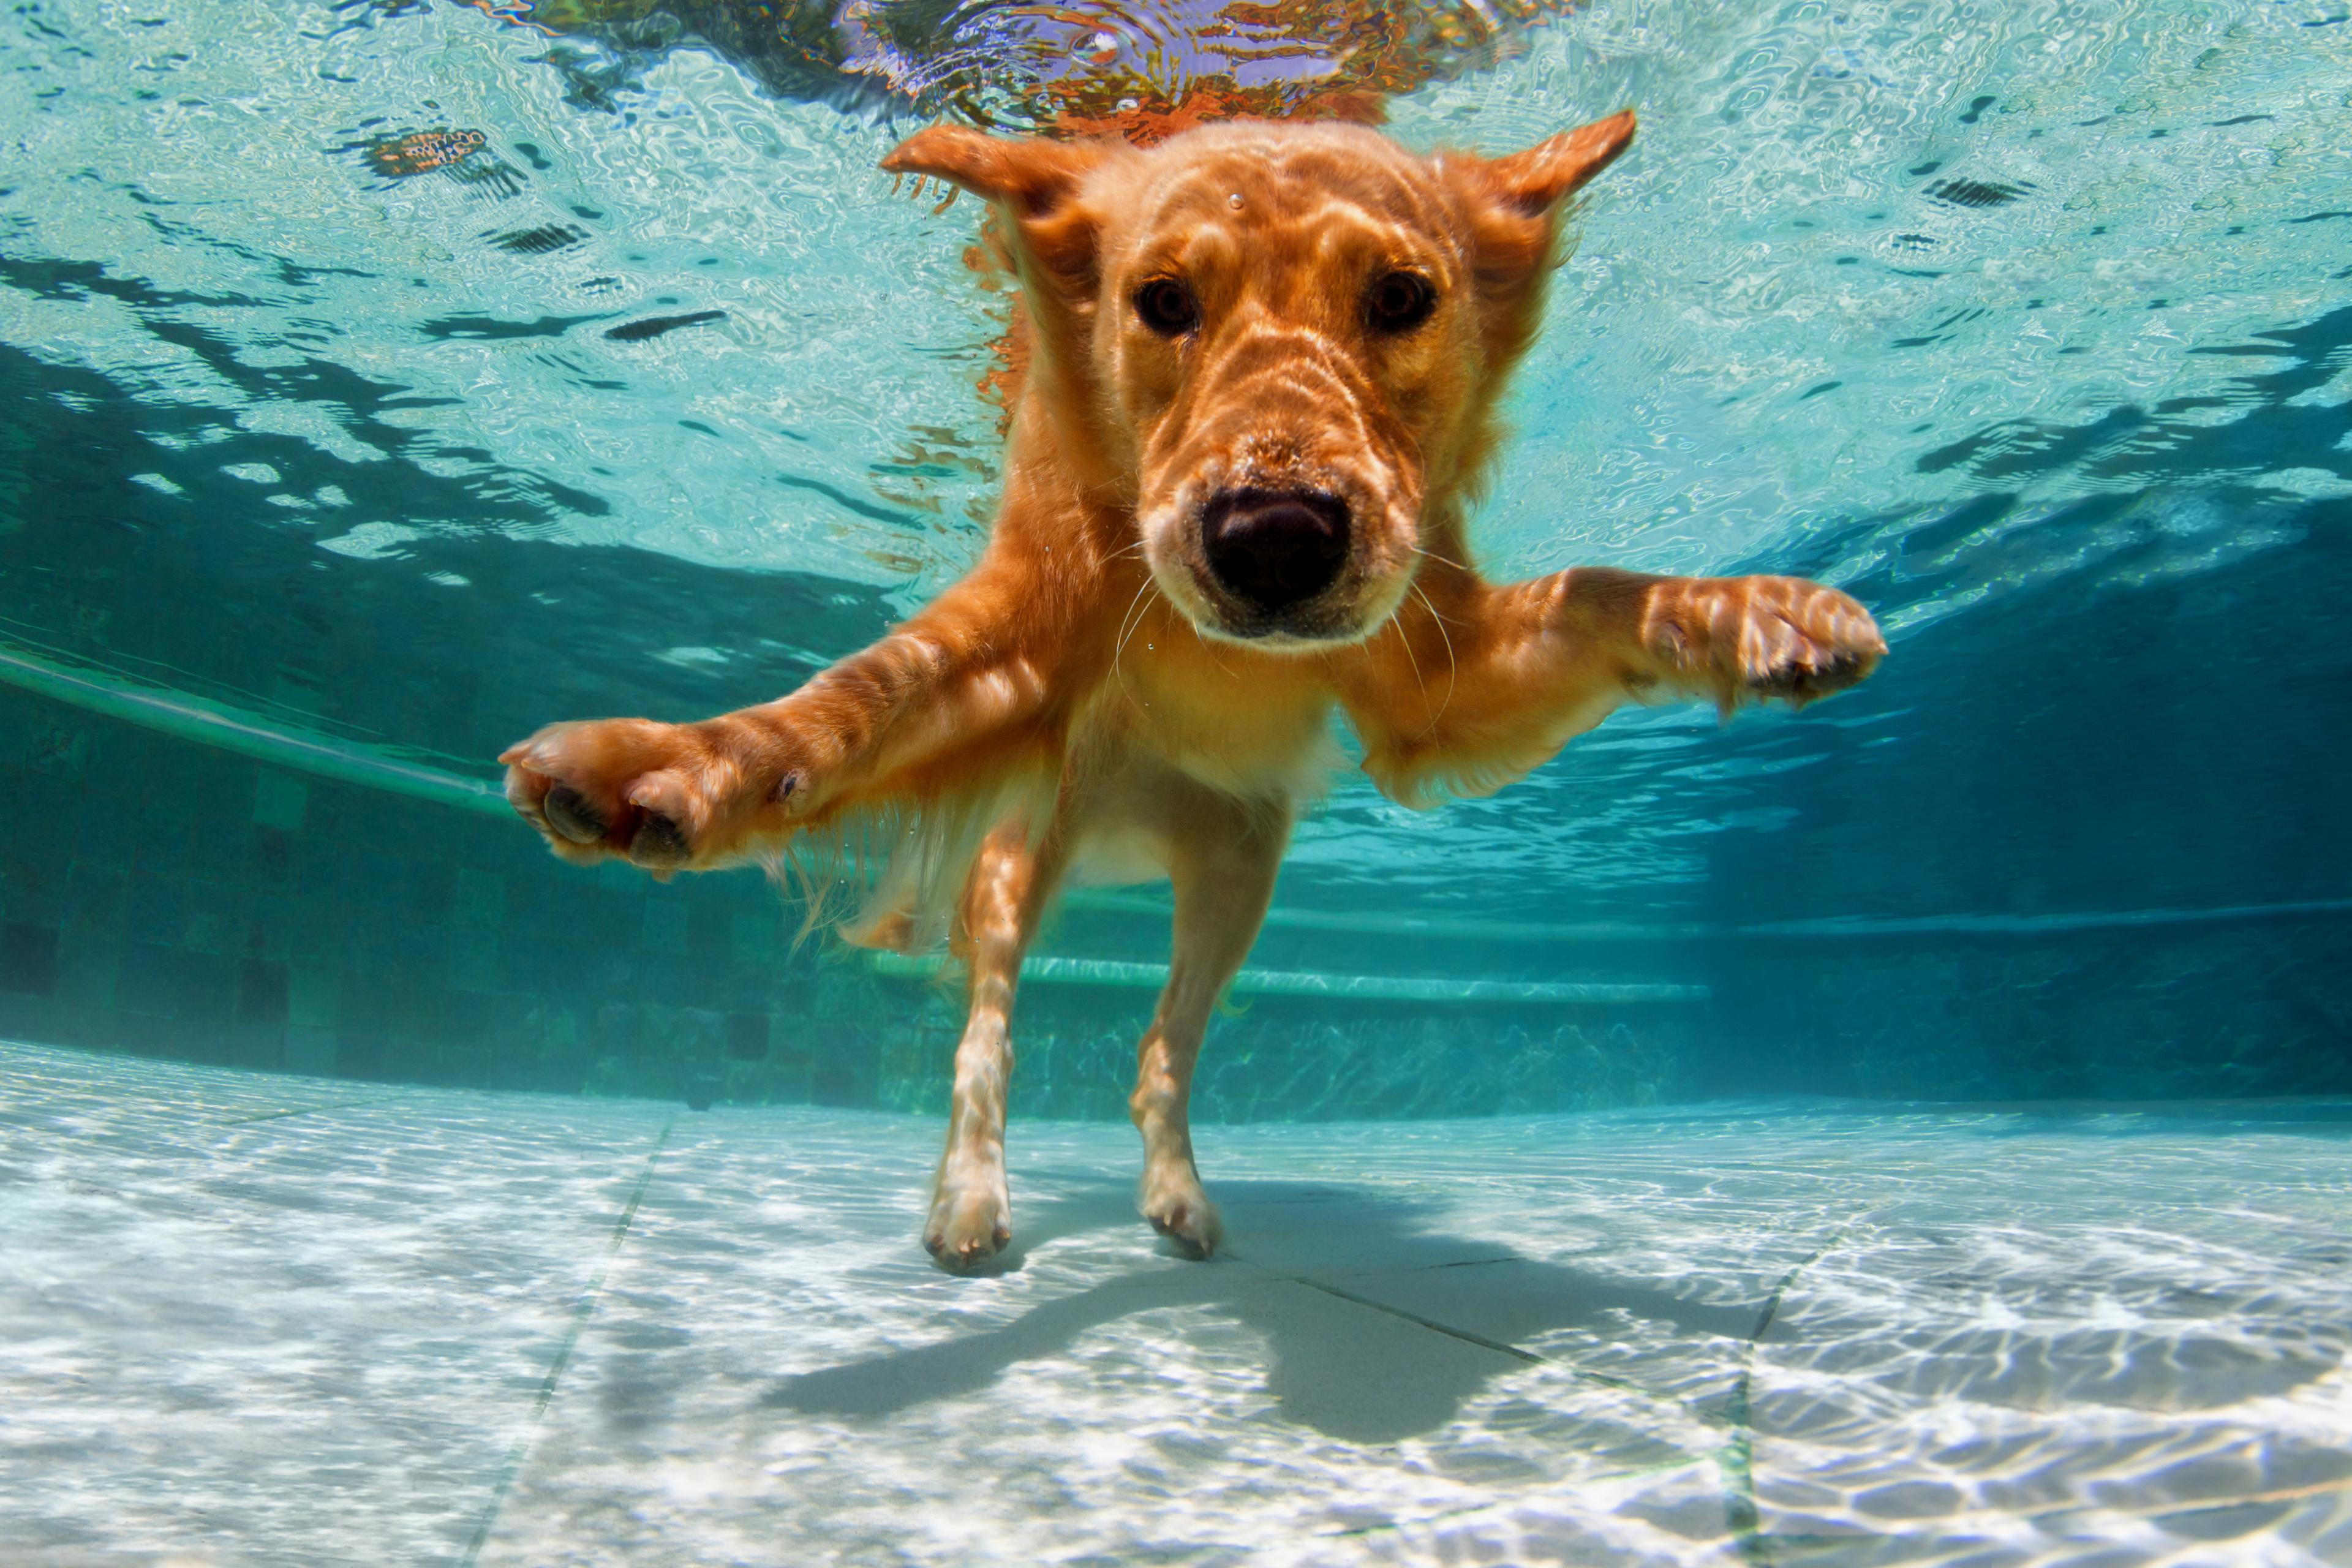 A golden retriever swims underwater creating bubbles.